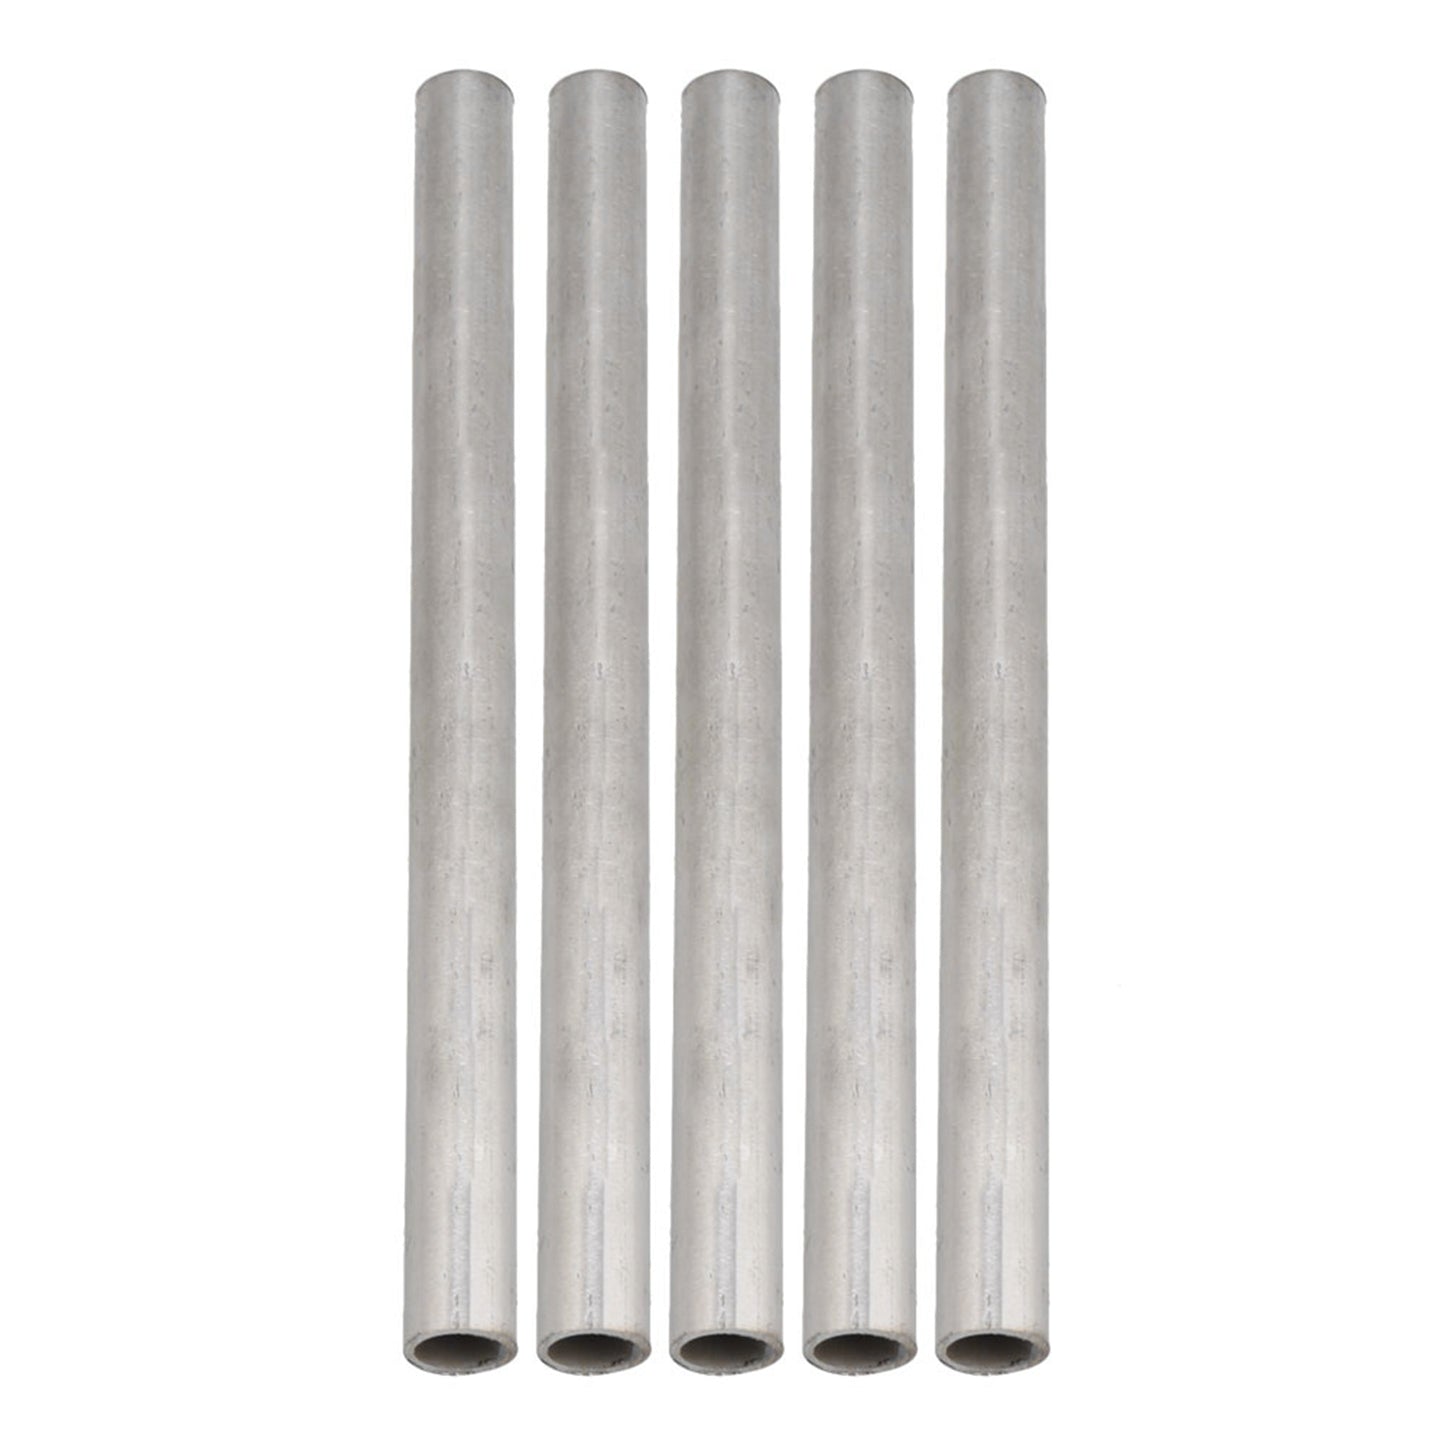 BQLZR 200x15x1.5mm 304 Stainless Steel Tubing ID 12mm Seamless Metal Tube Pack of 5